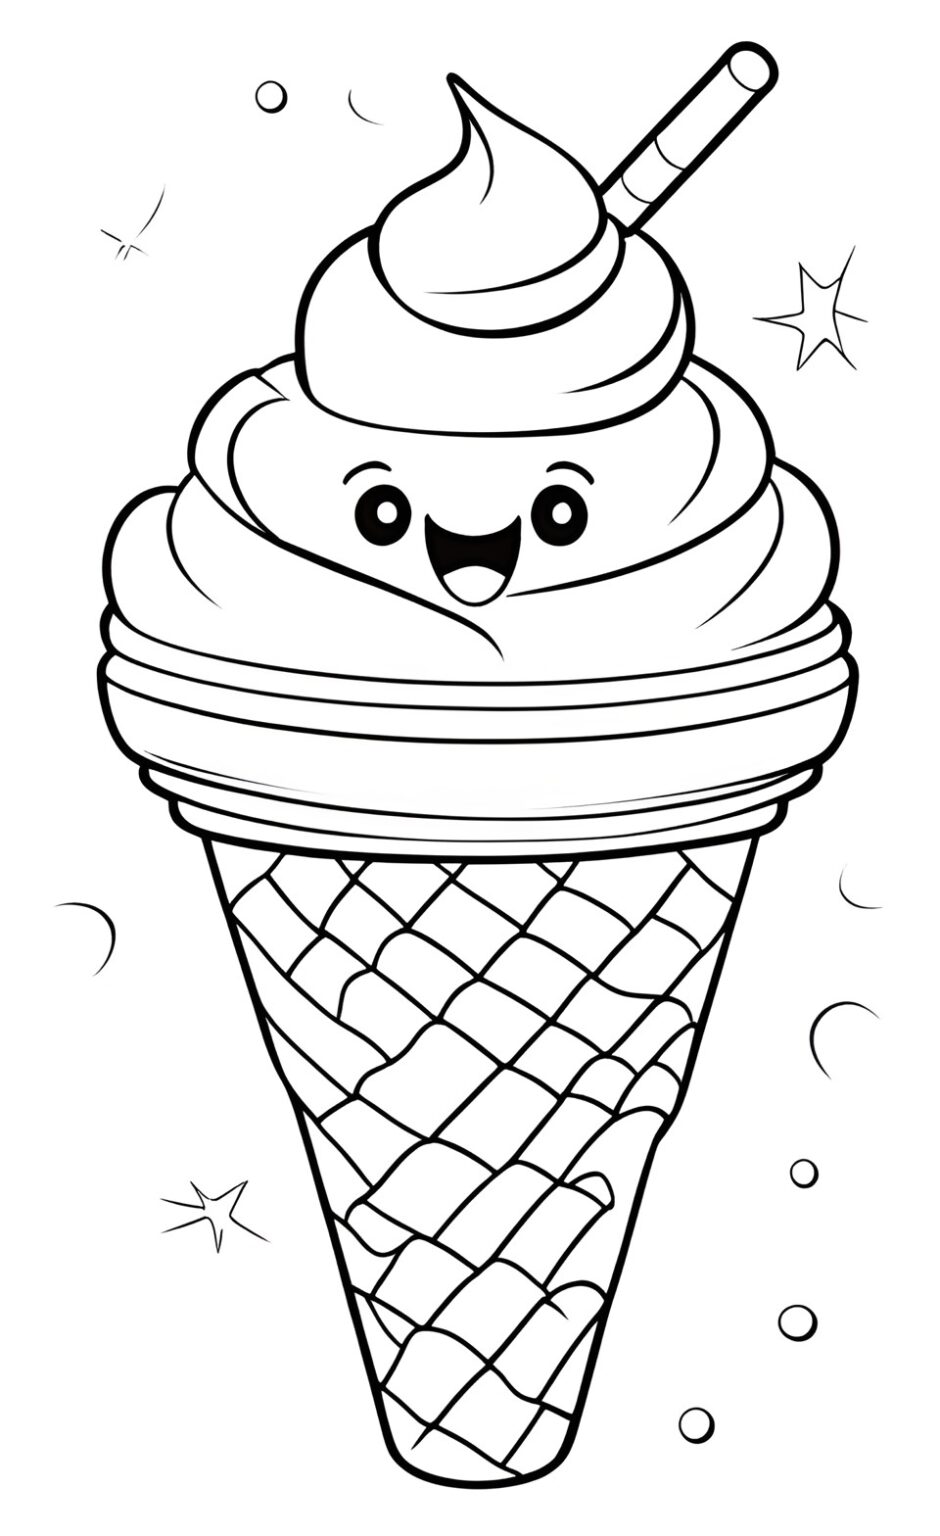 Simple Summer Ice Cream coloring pages for kids – EĞİTİM KÜLTÜR